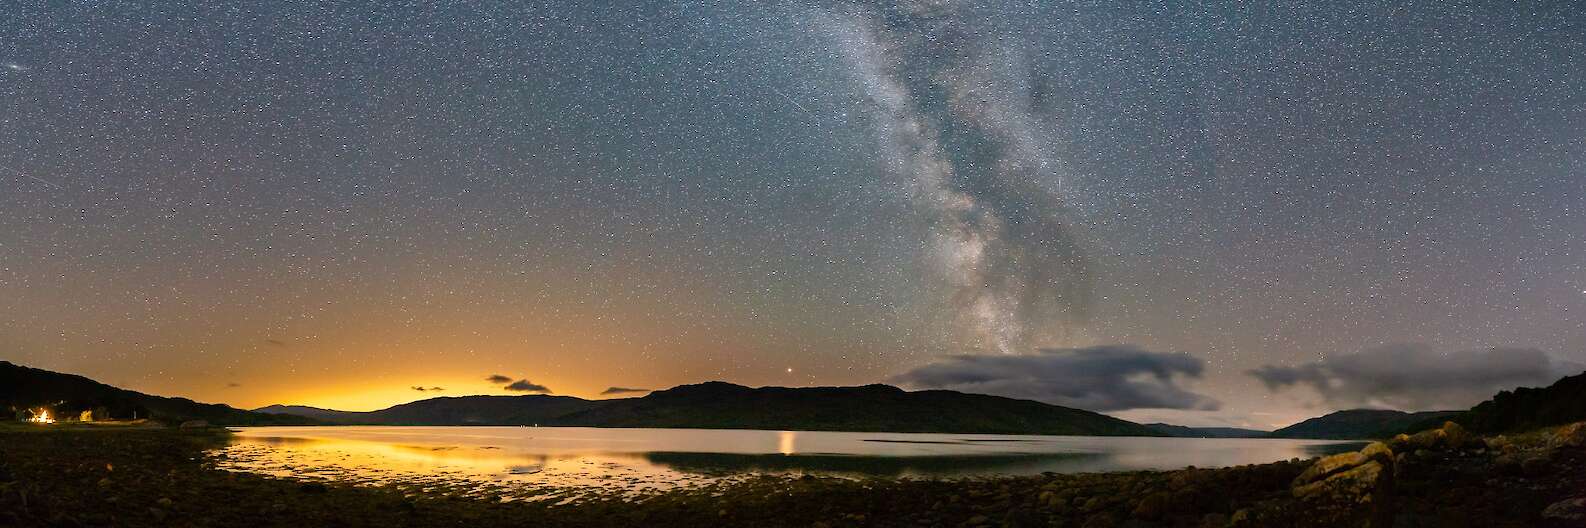 Loch Sunart Milky Way and night sky | Courtesy of Steven Marshall Photography - www.smarshall-photography.com